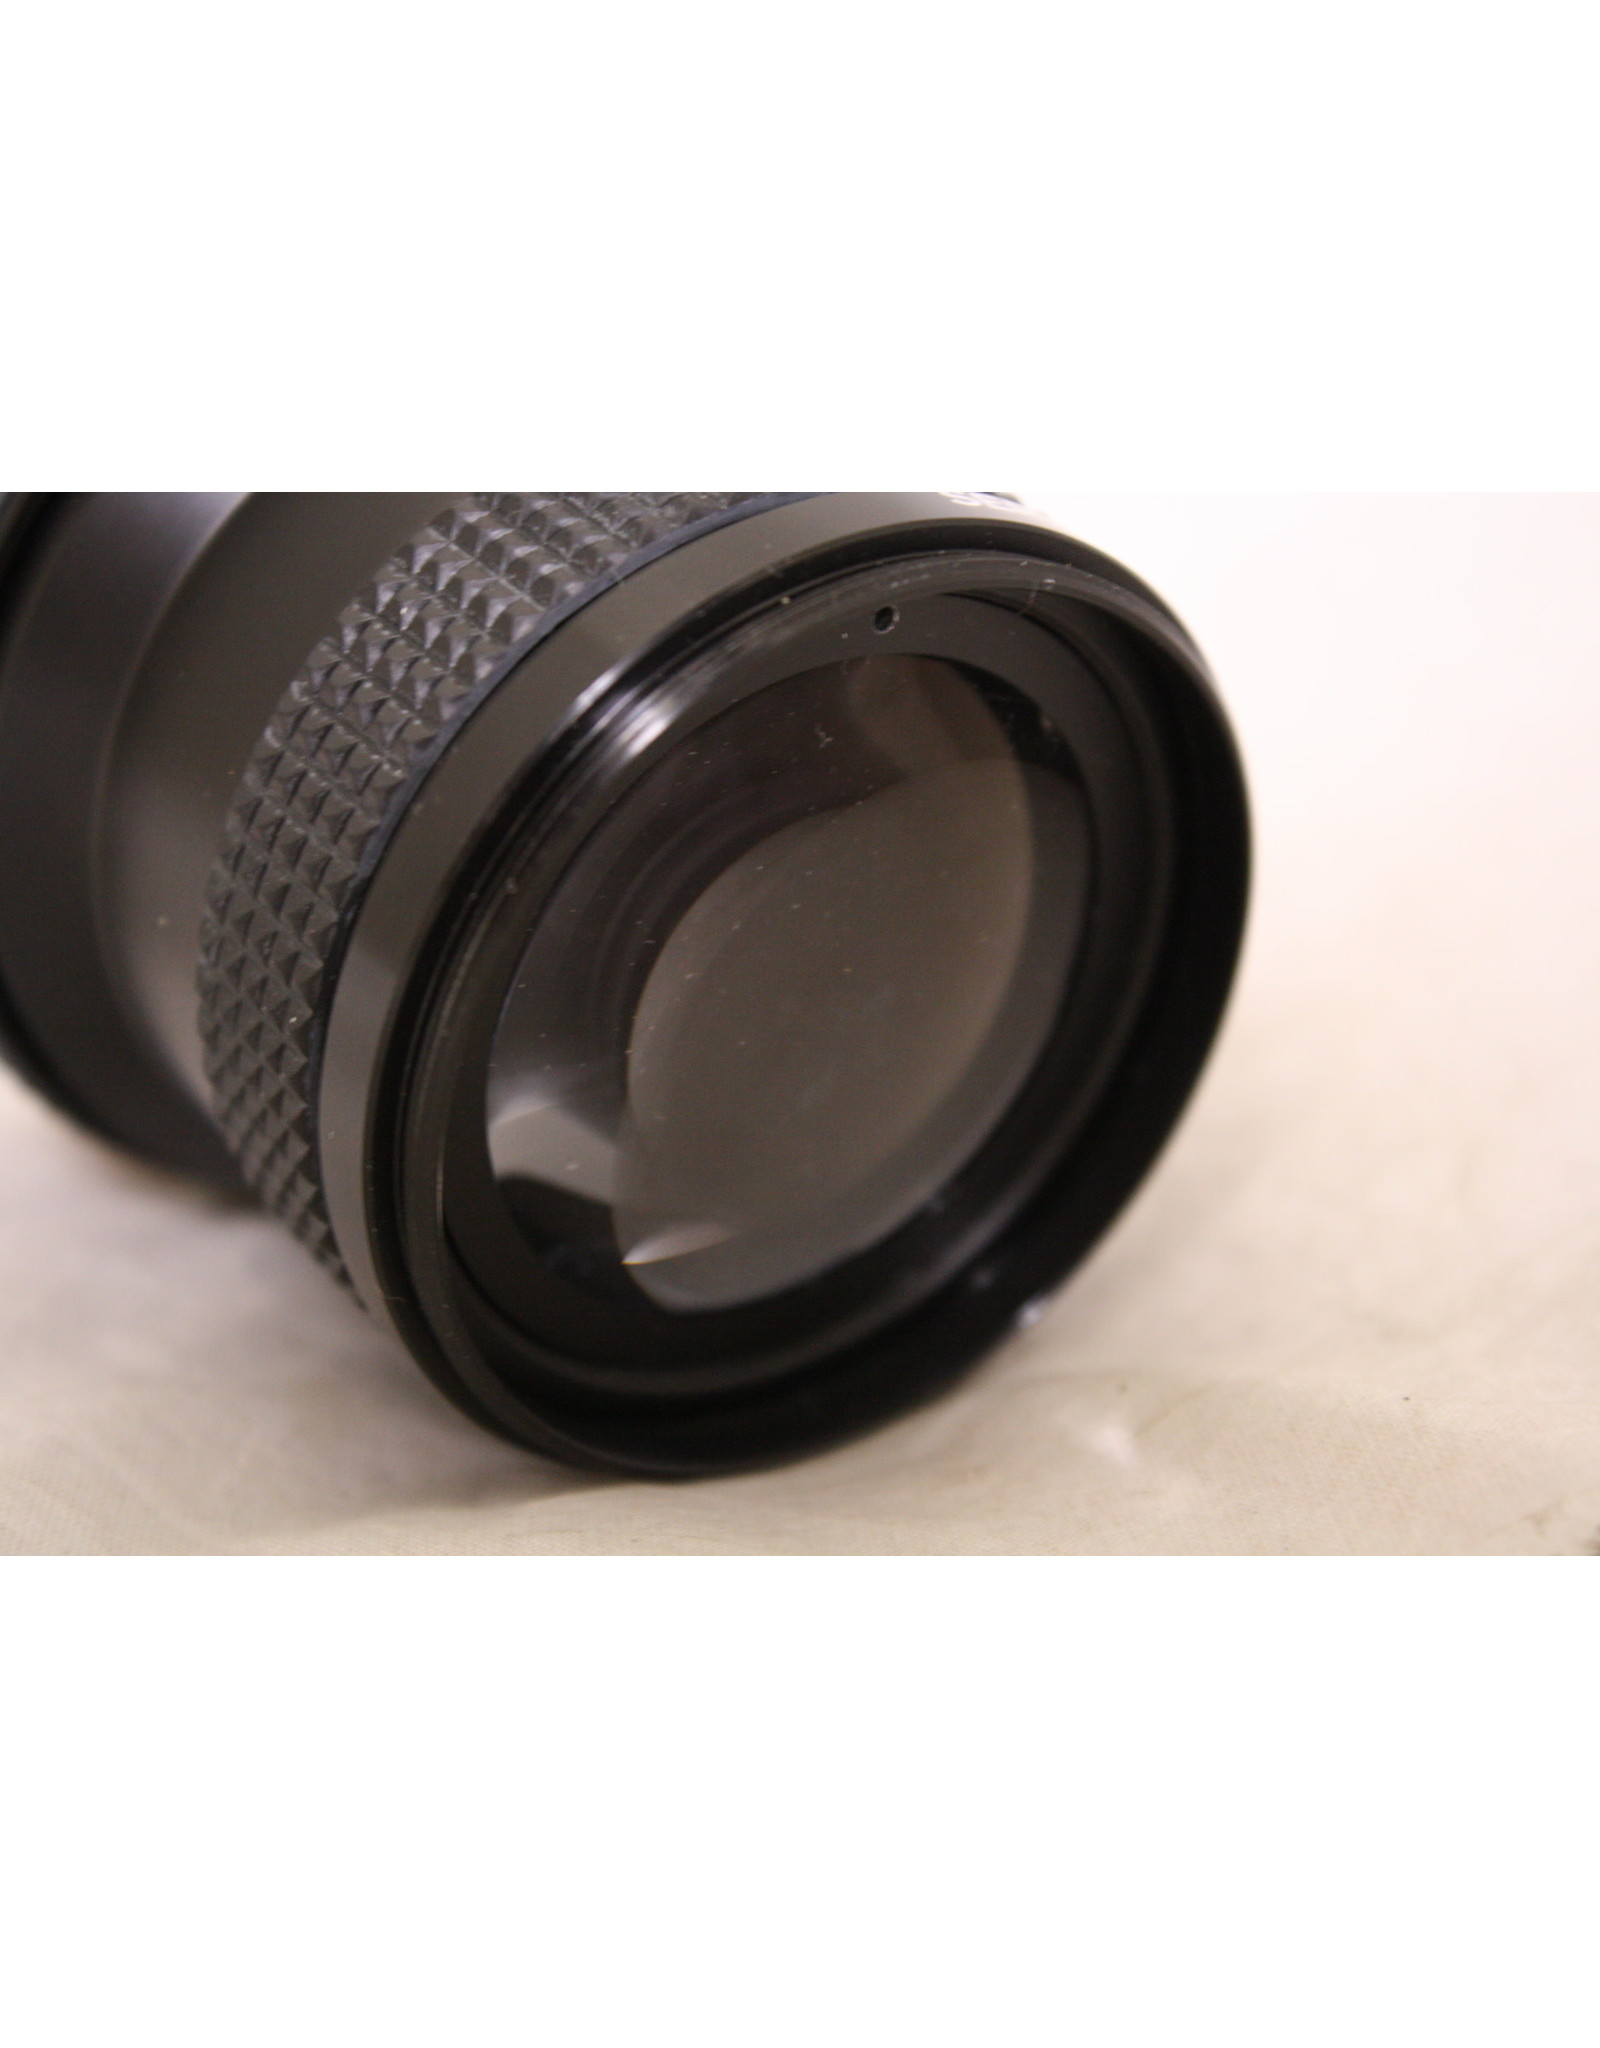 Phoenix Phoenix Super AF Fisheye Lens 0.25X for 55mm Filter Thread